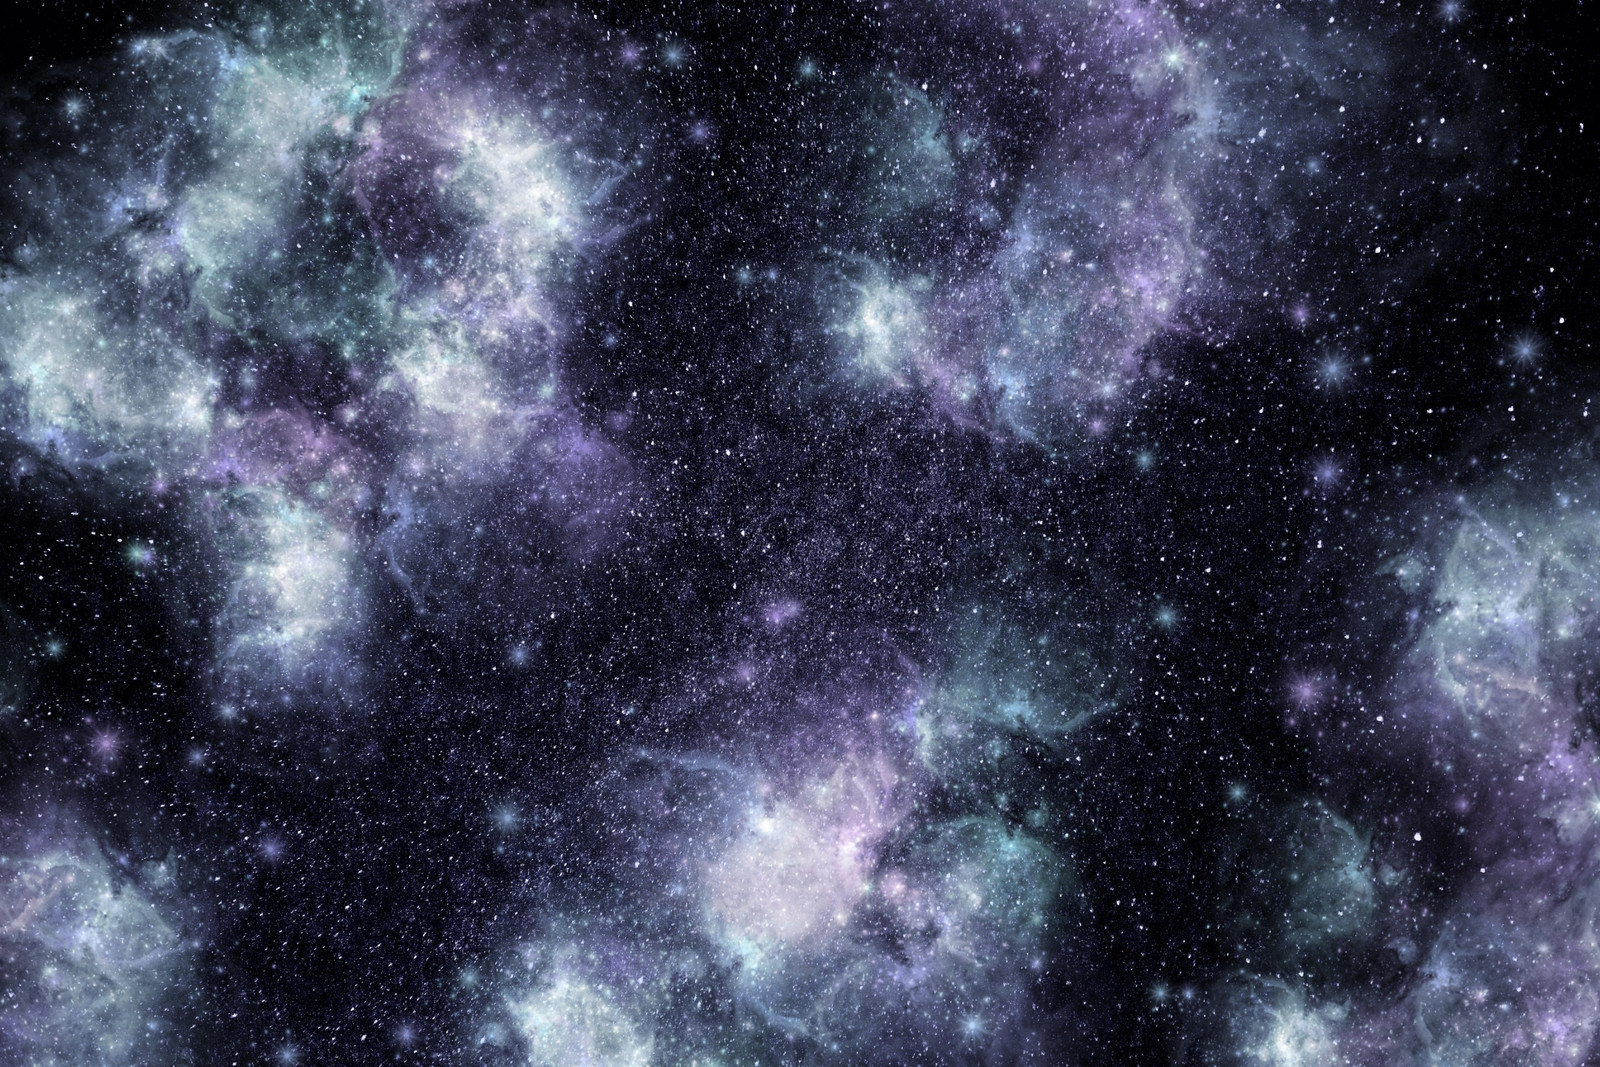 galaxy print - Google Search  Galaxy wallpaper, Galaxy art, Nebula